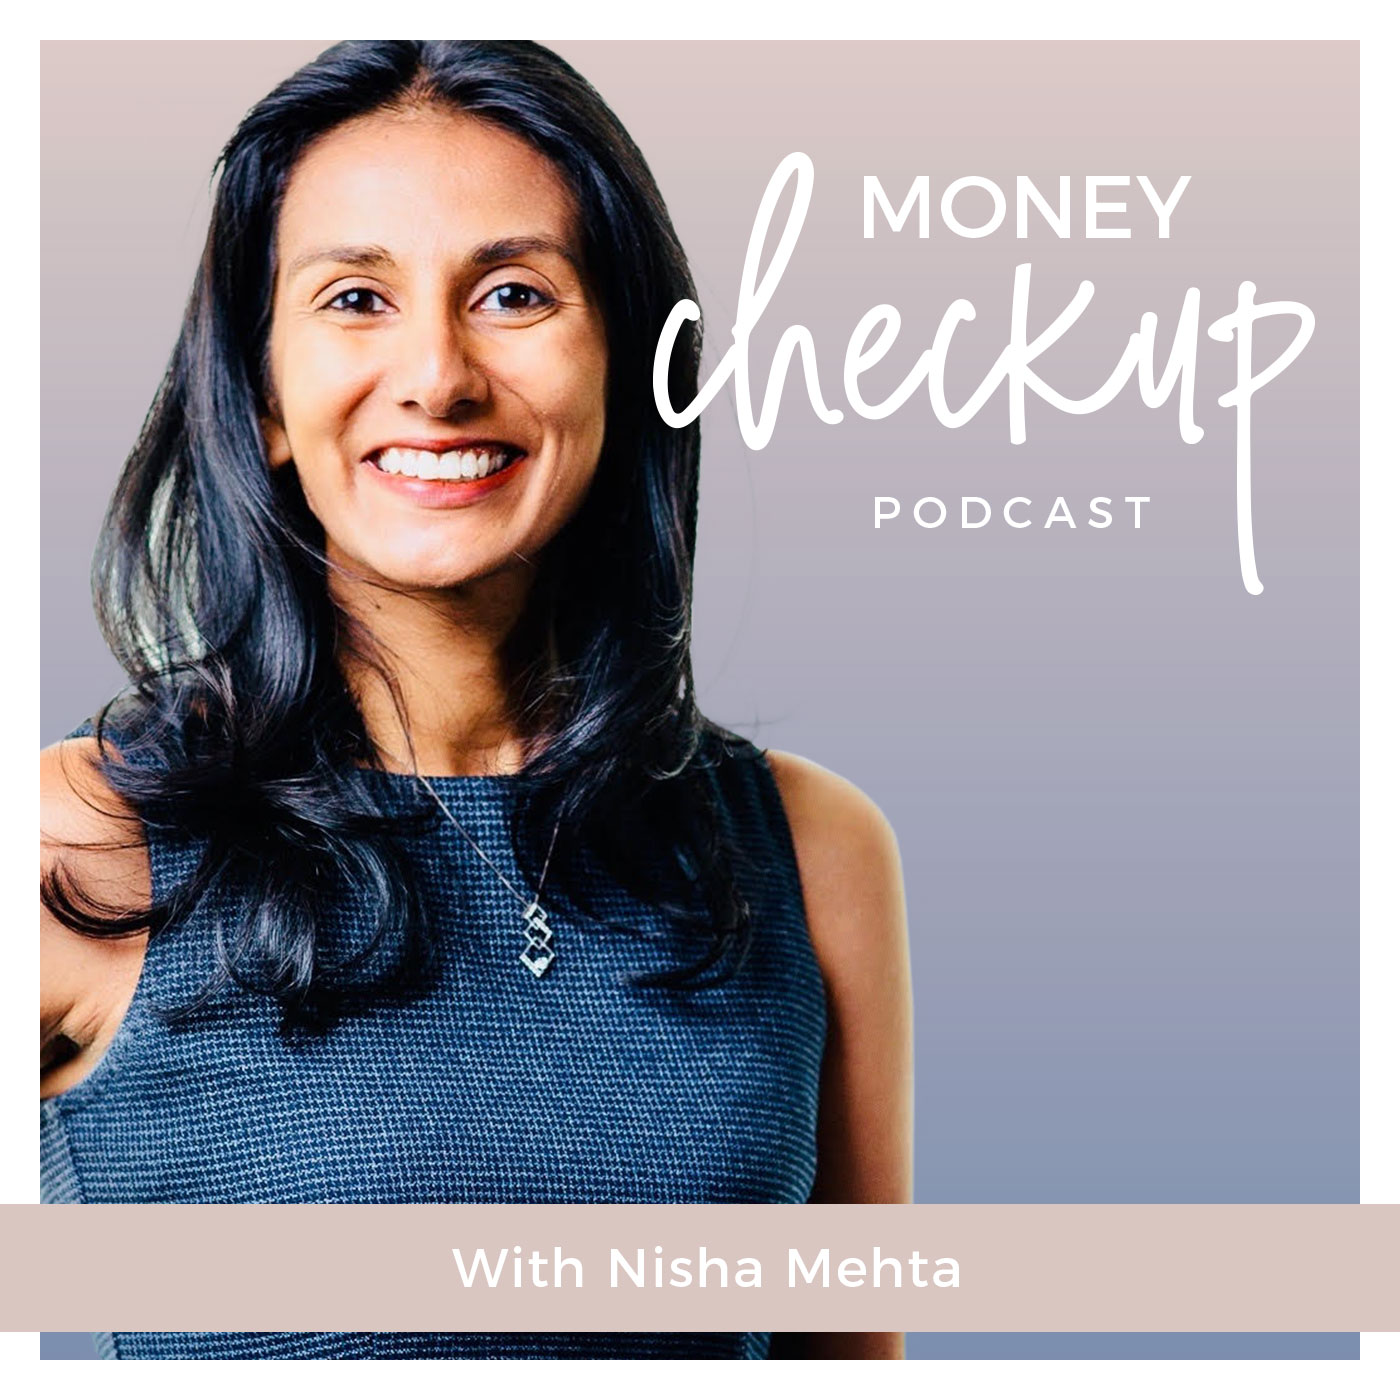 Money Checkup Podcast With Nisha Mehta